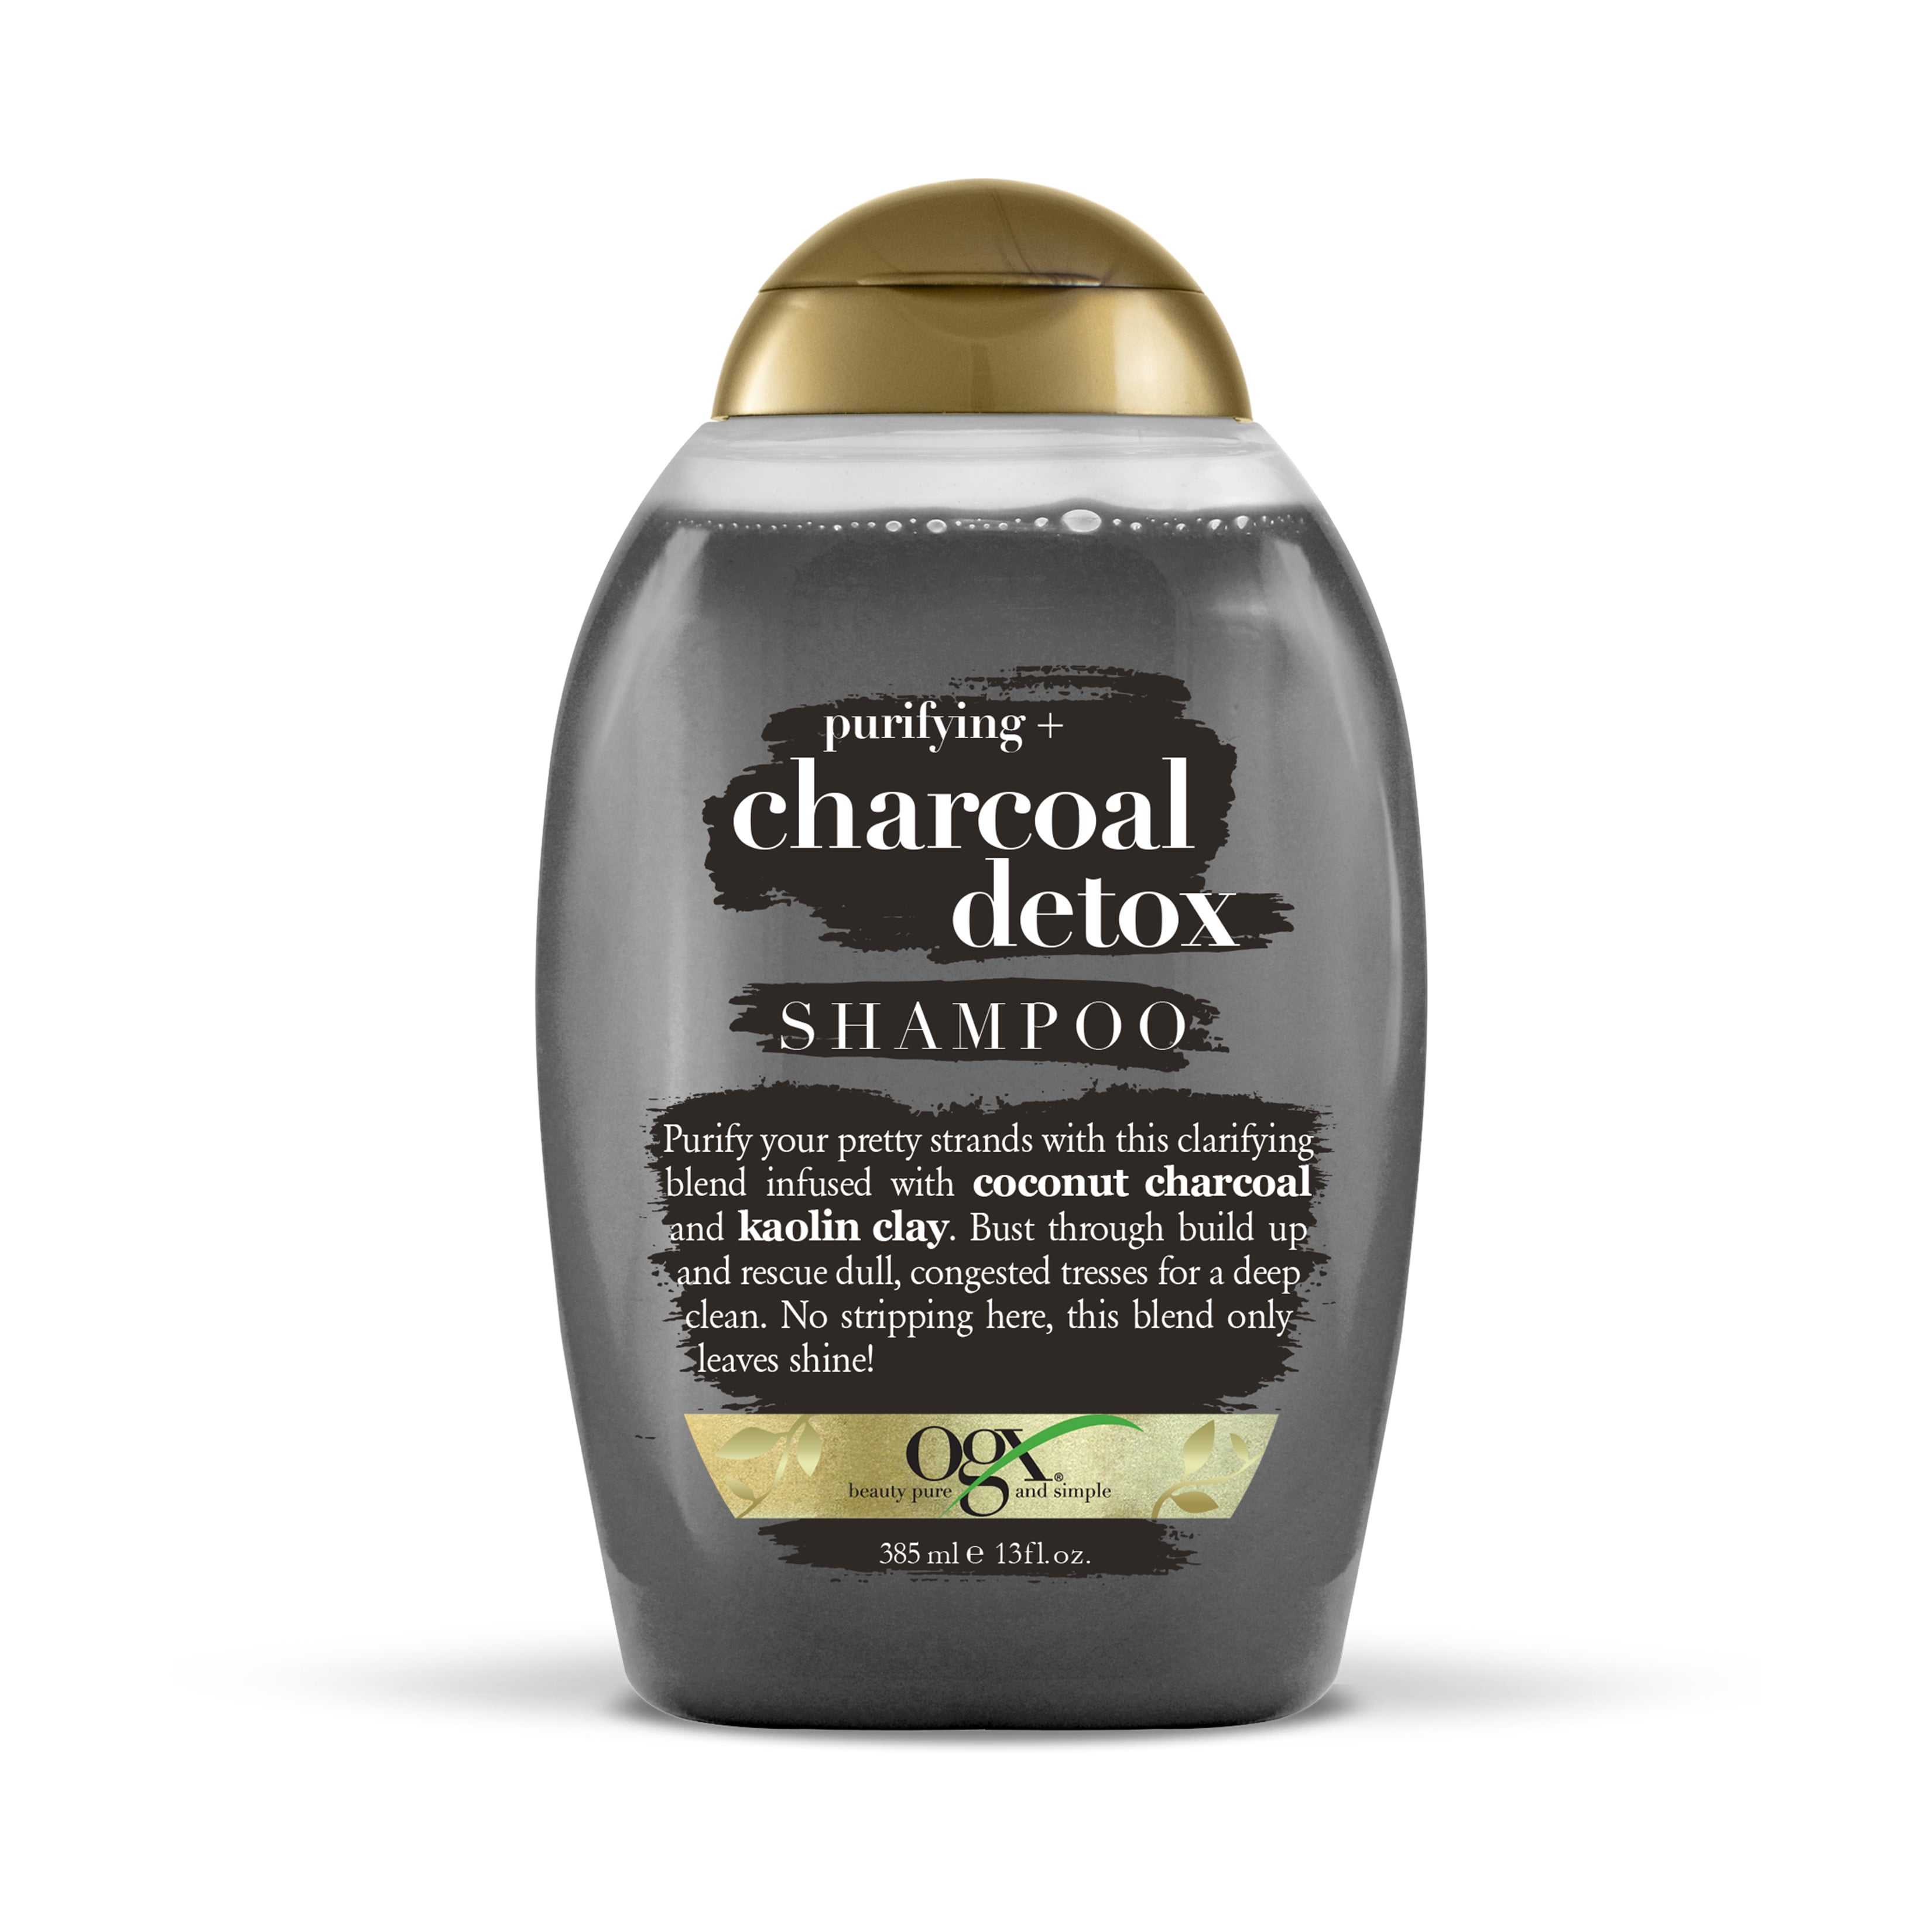 + Fl Detox Buildup Oz Purifying Charcoal Shampoo OGX Sulfates, Nourishment, Light and Removal No for 13